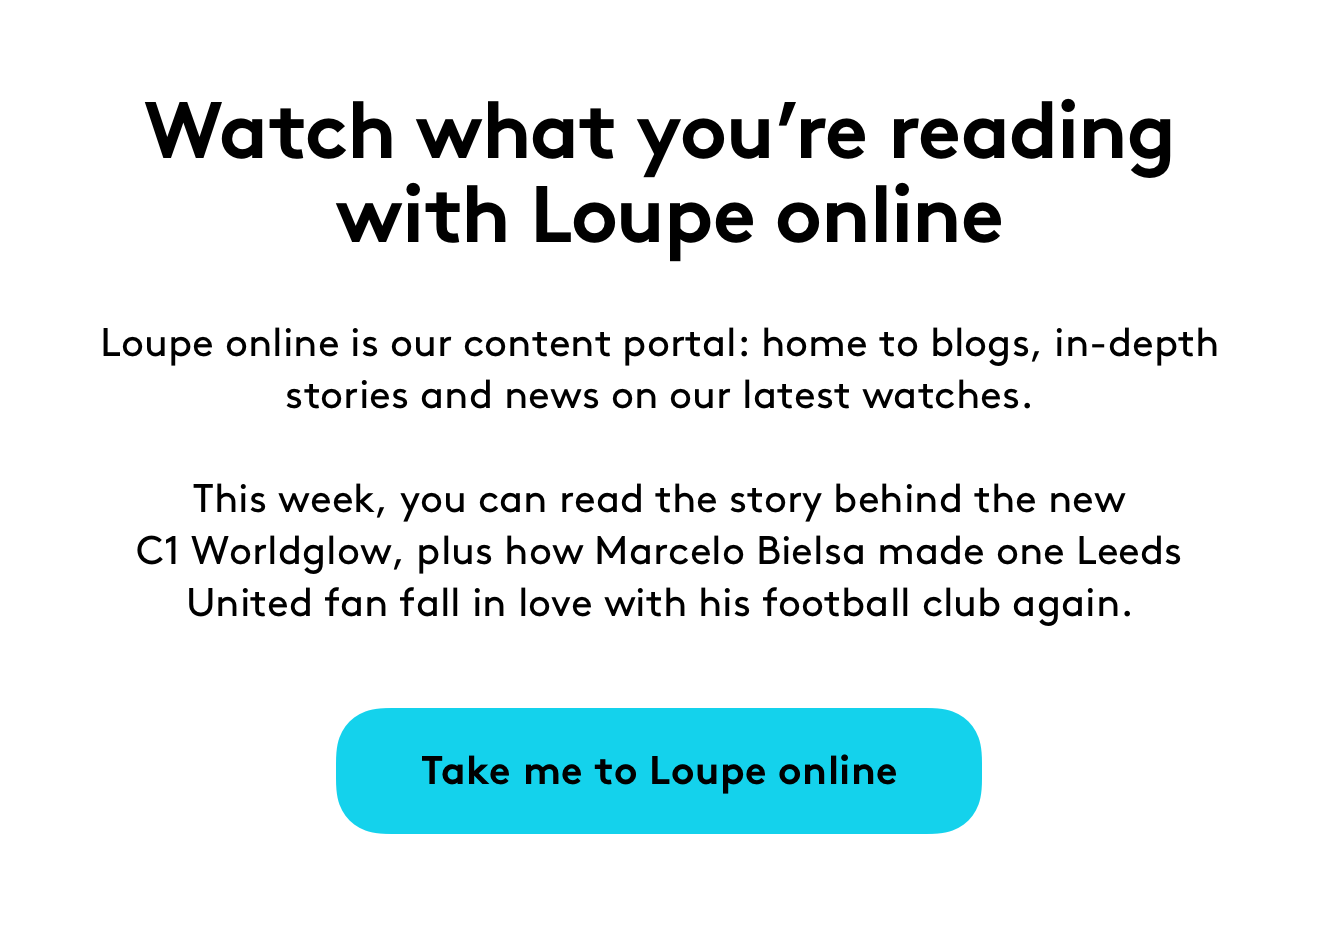 Take me to Loupe online